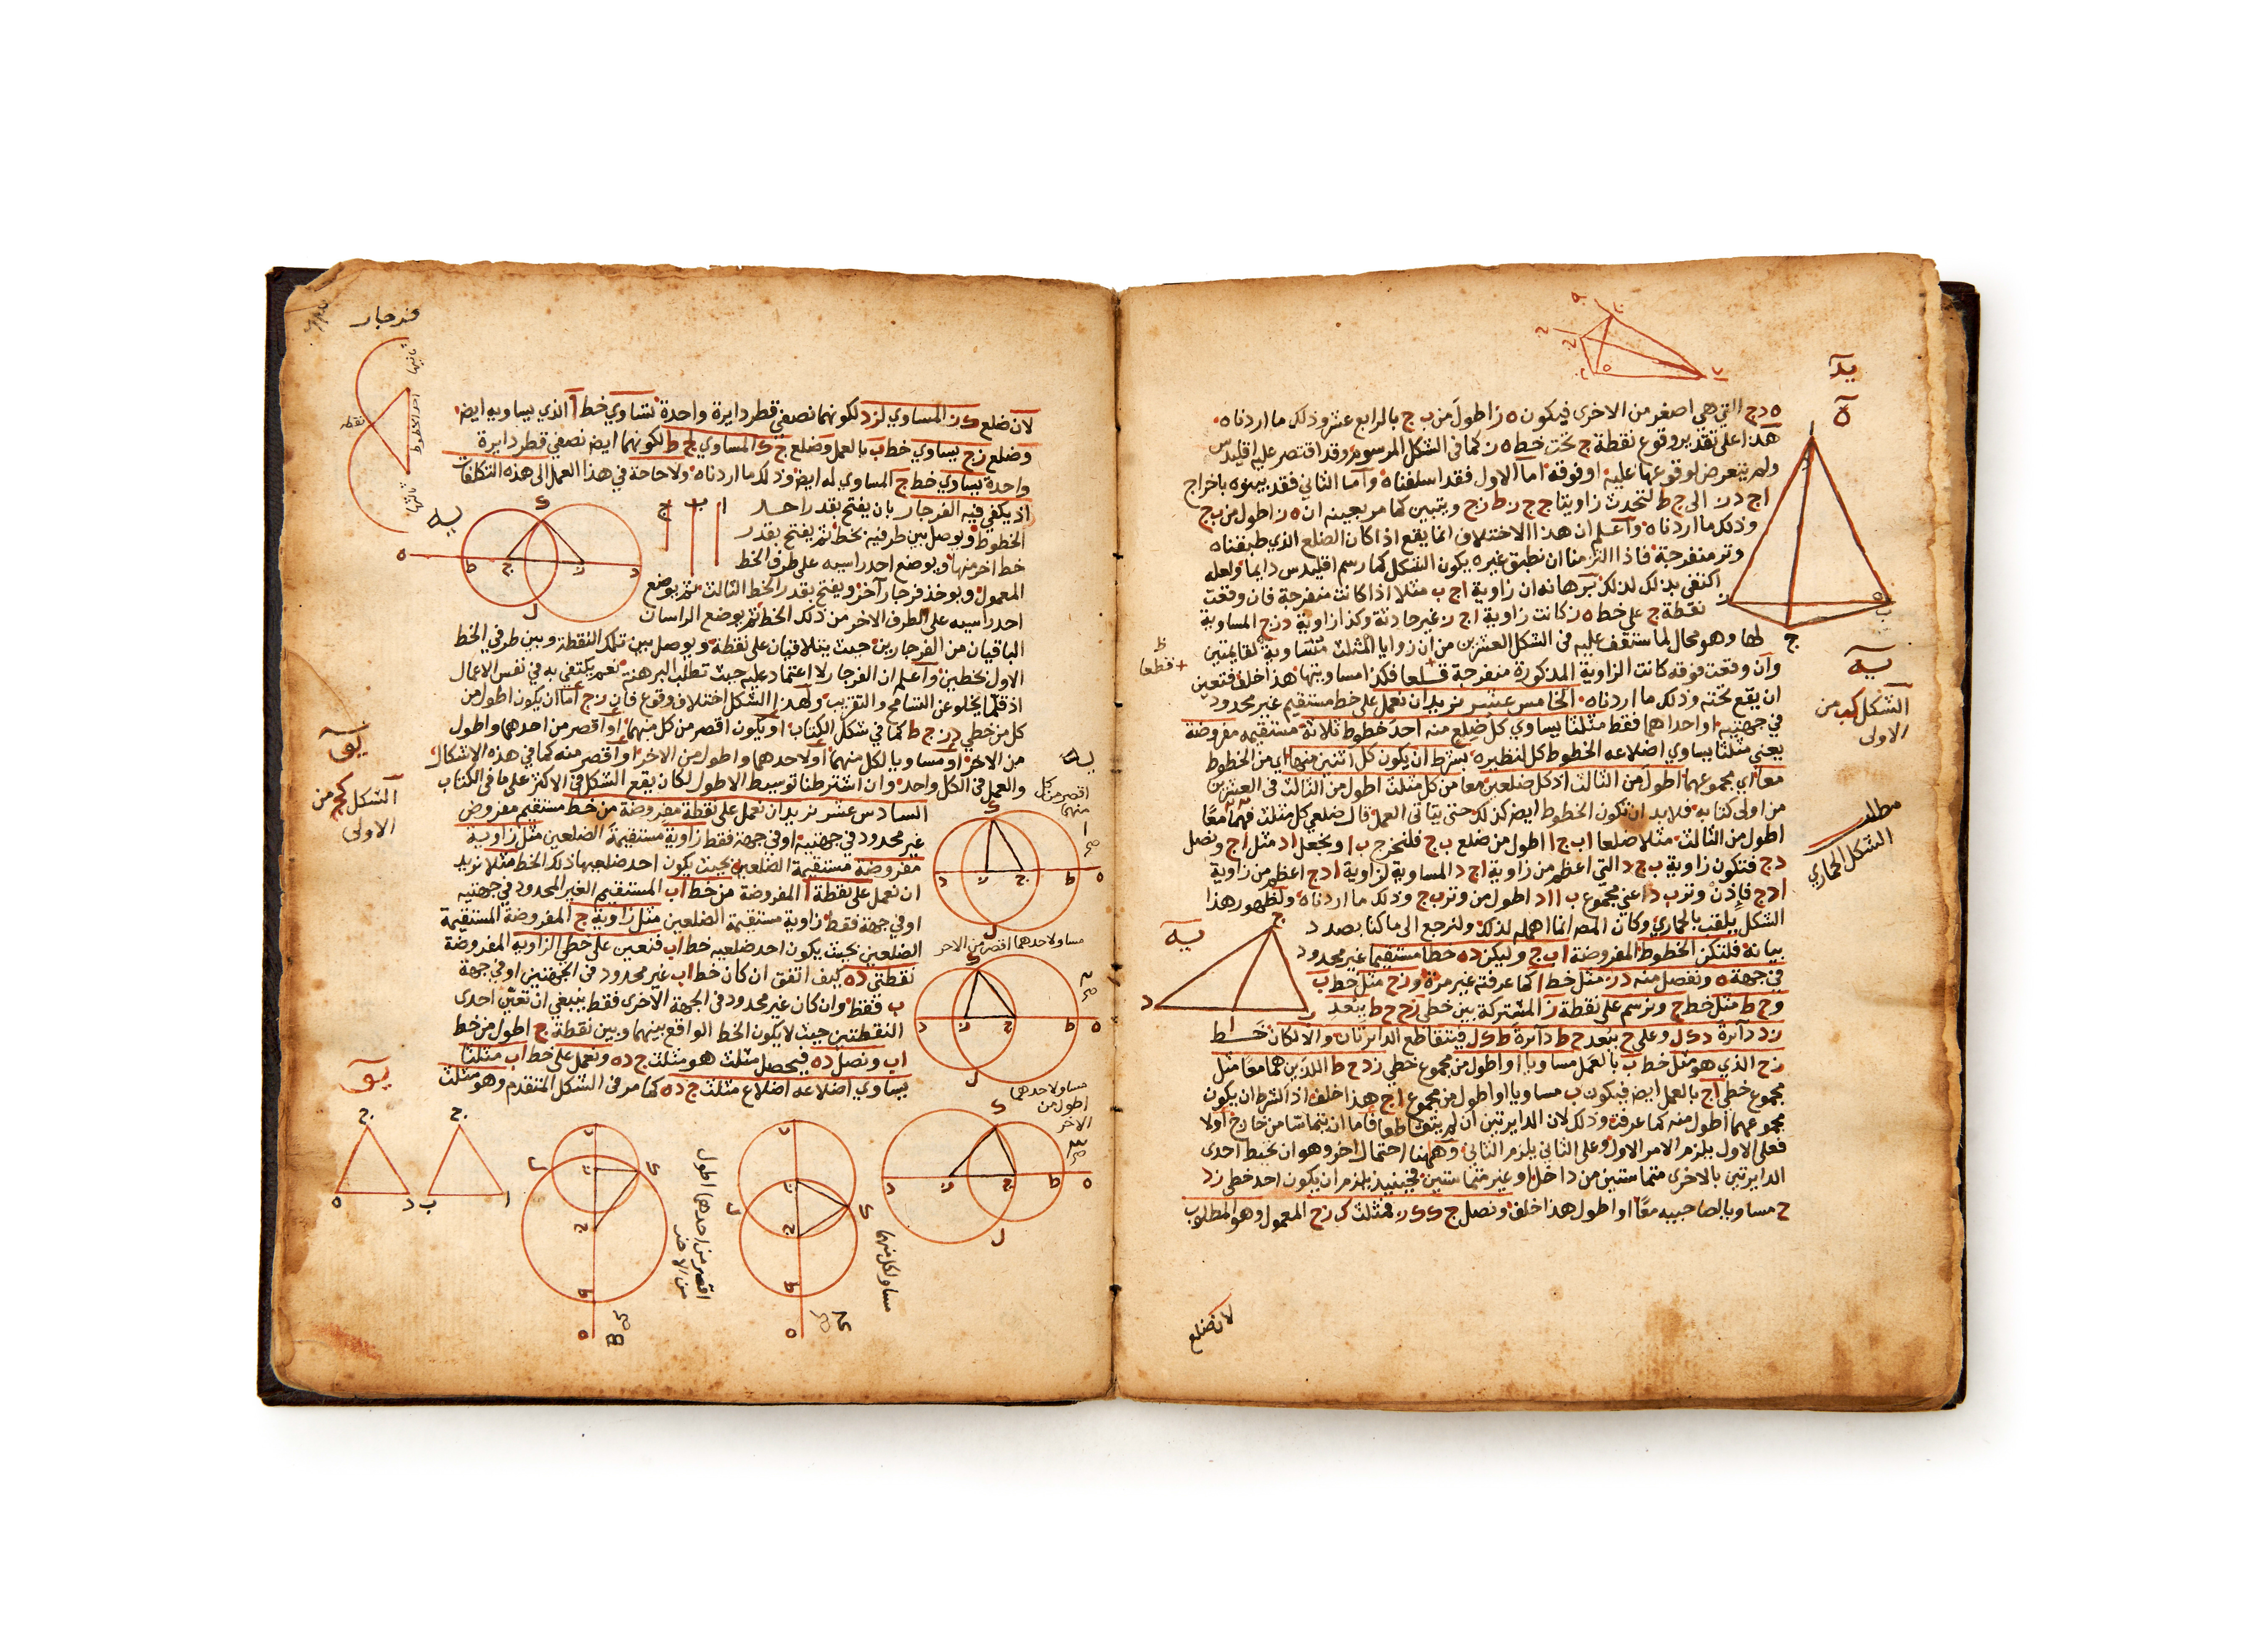 ABDUL MOUTI BIN HASSAN BIN ABDULLAH AL MEKKI, A MANUSCRIPT ABOUT GEOMETRY & MATHS, DATED 983AH - Image 6 of 16